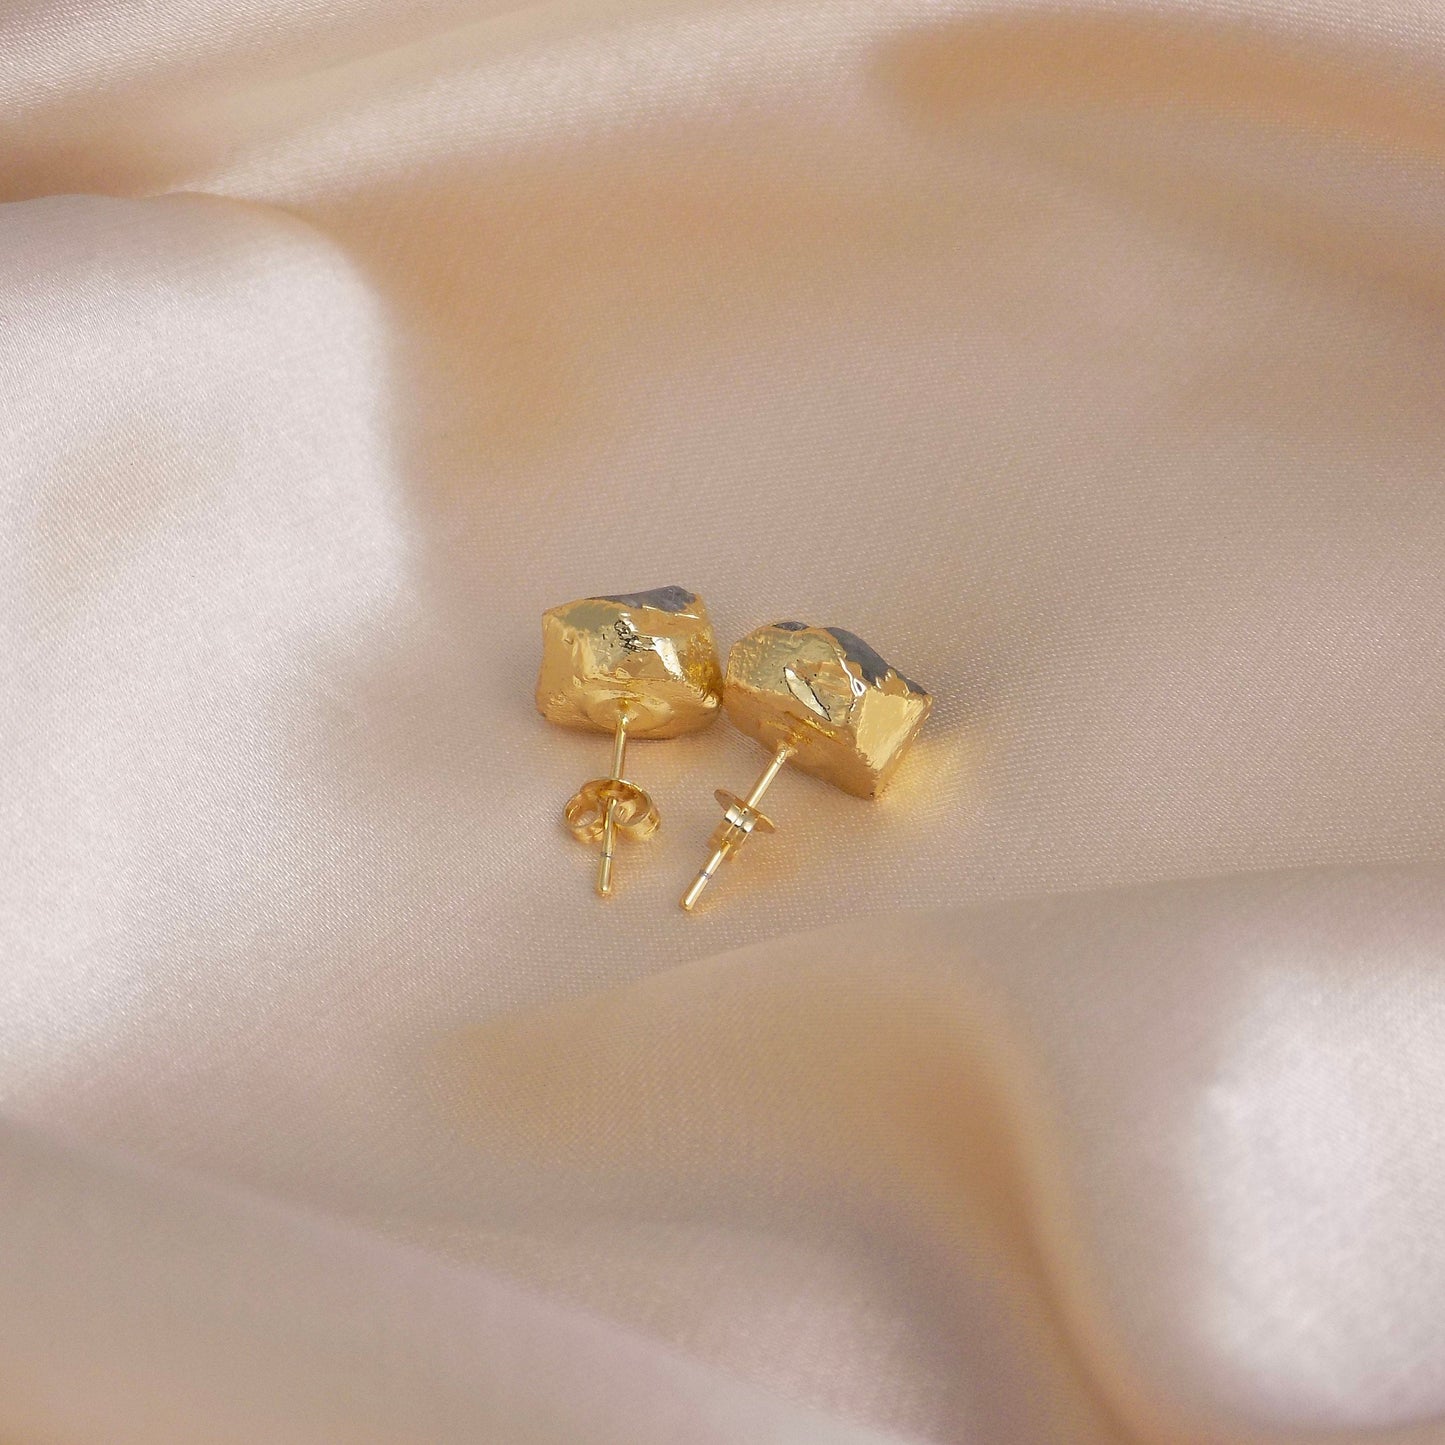 Raw Aquamarine Stud Earrings, Rough Crystal Earrings Gold, Boho March Birthstone Gift Women, M6-735